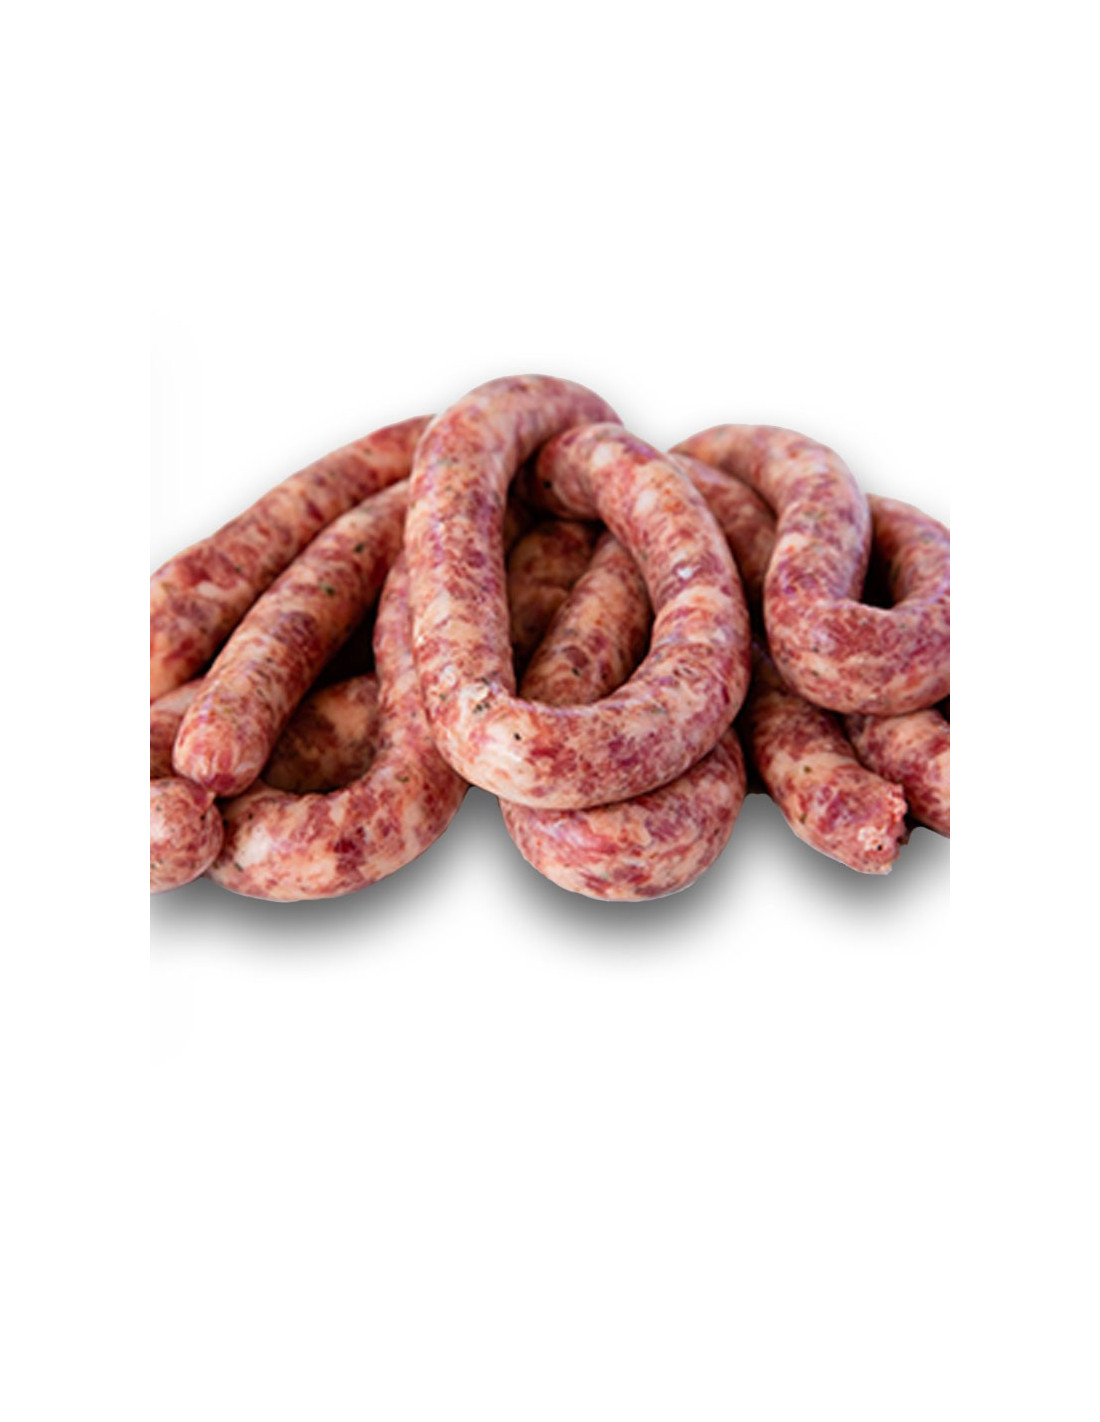 Buy Salchicha Parrillera - Sausage, from 1.5kg